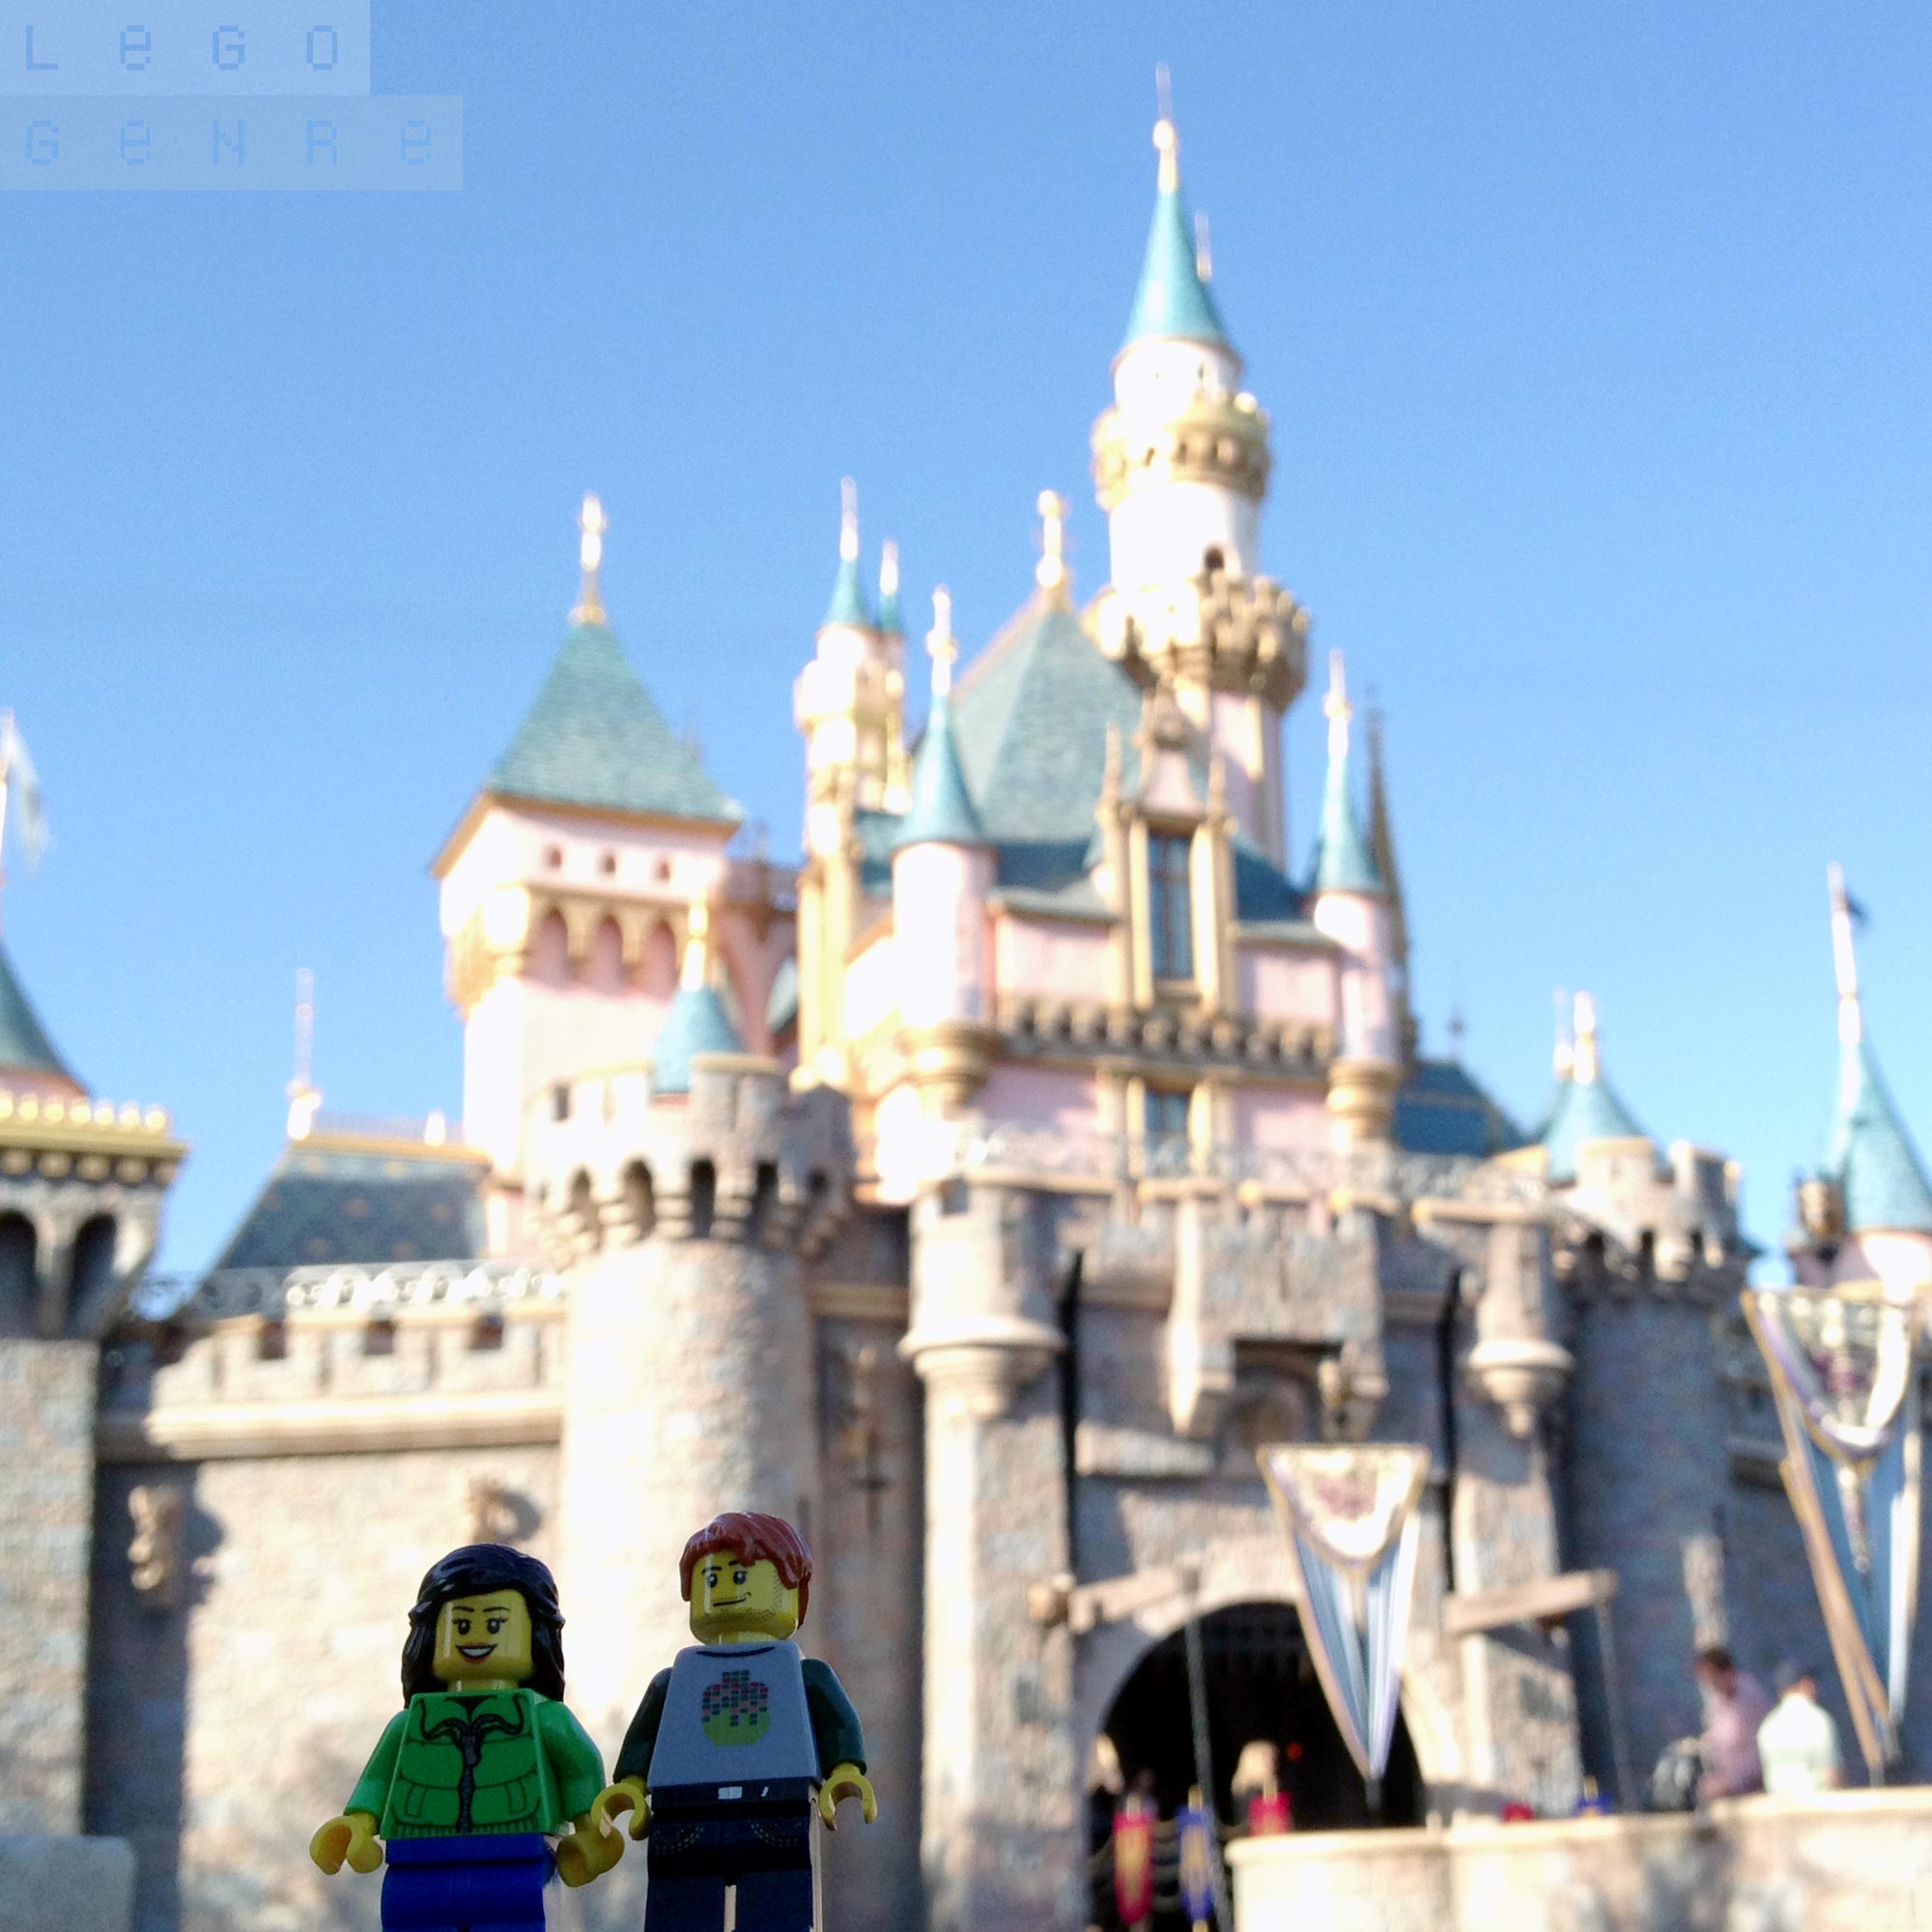 LegoGenre 00310: Greetings From Disneyland!